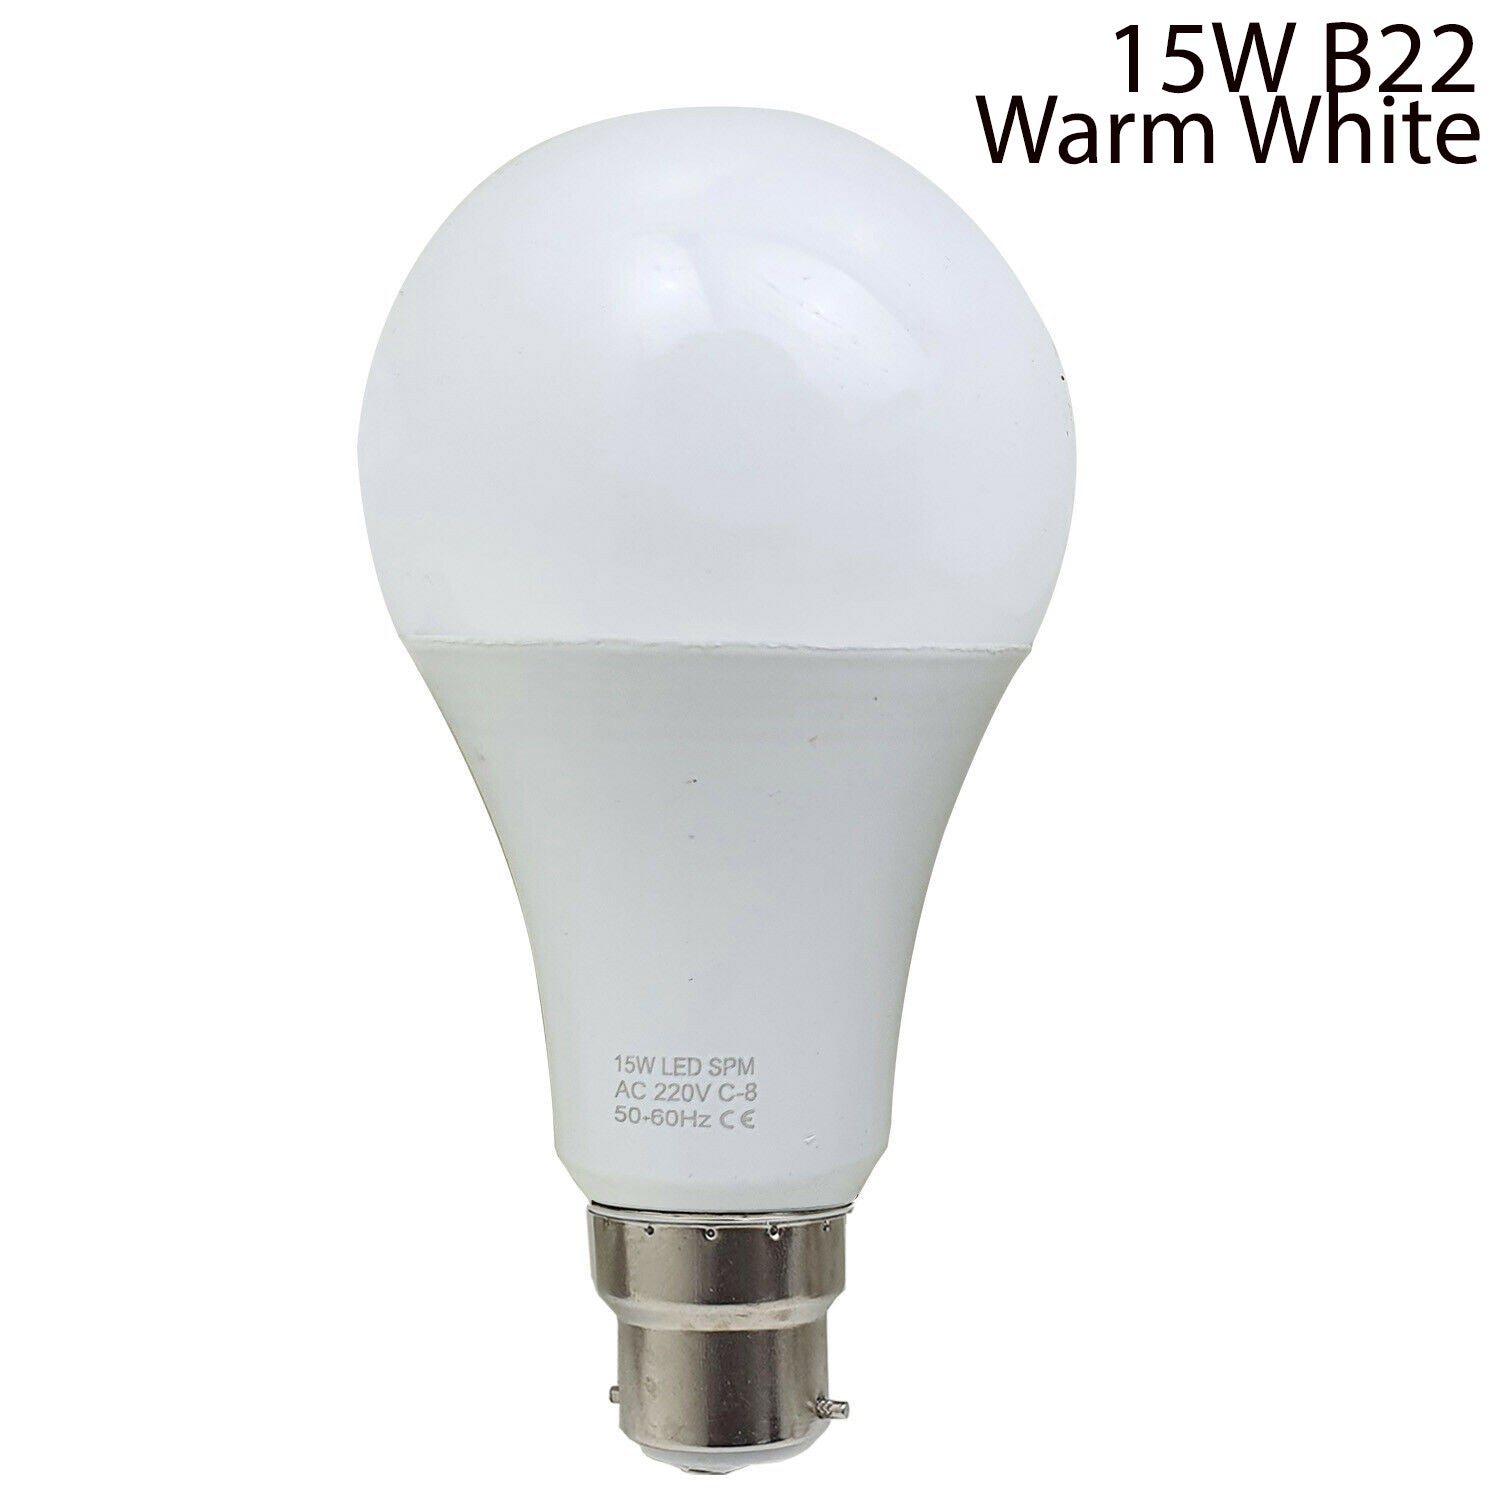 15W B22 Light Bulb Energy Saving Lamp Warm White Globe~1376 - LEDSone UK Ltd